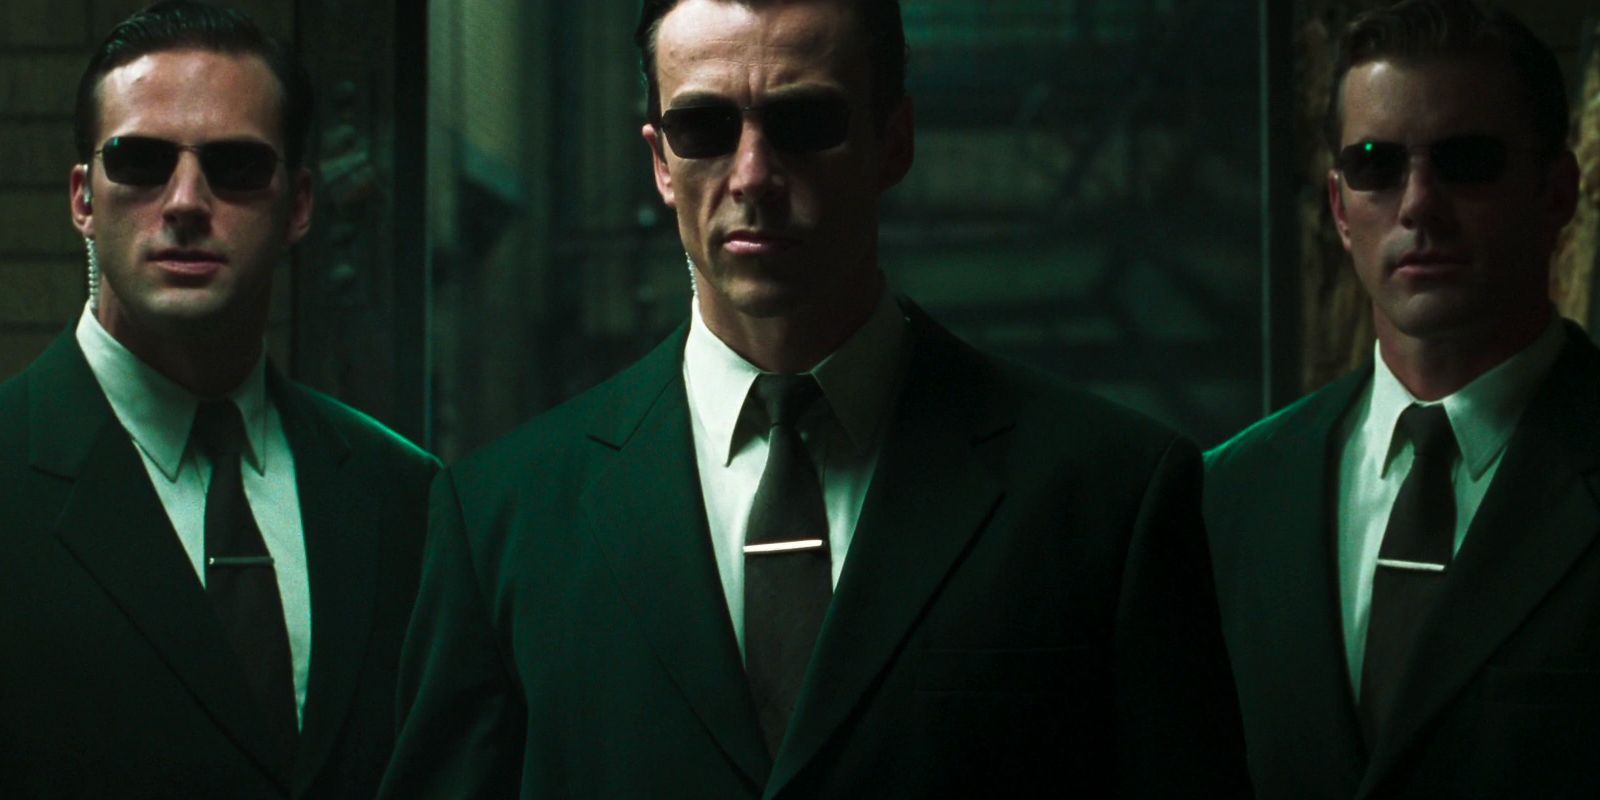 Daniel-Bernhardt-as-Daniel-Bernhardt-as-Agent-Johnson-in-The-Matrix-Reloaded